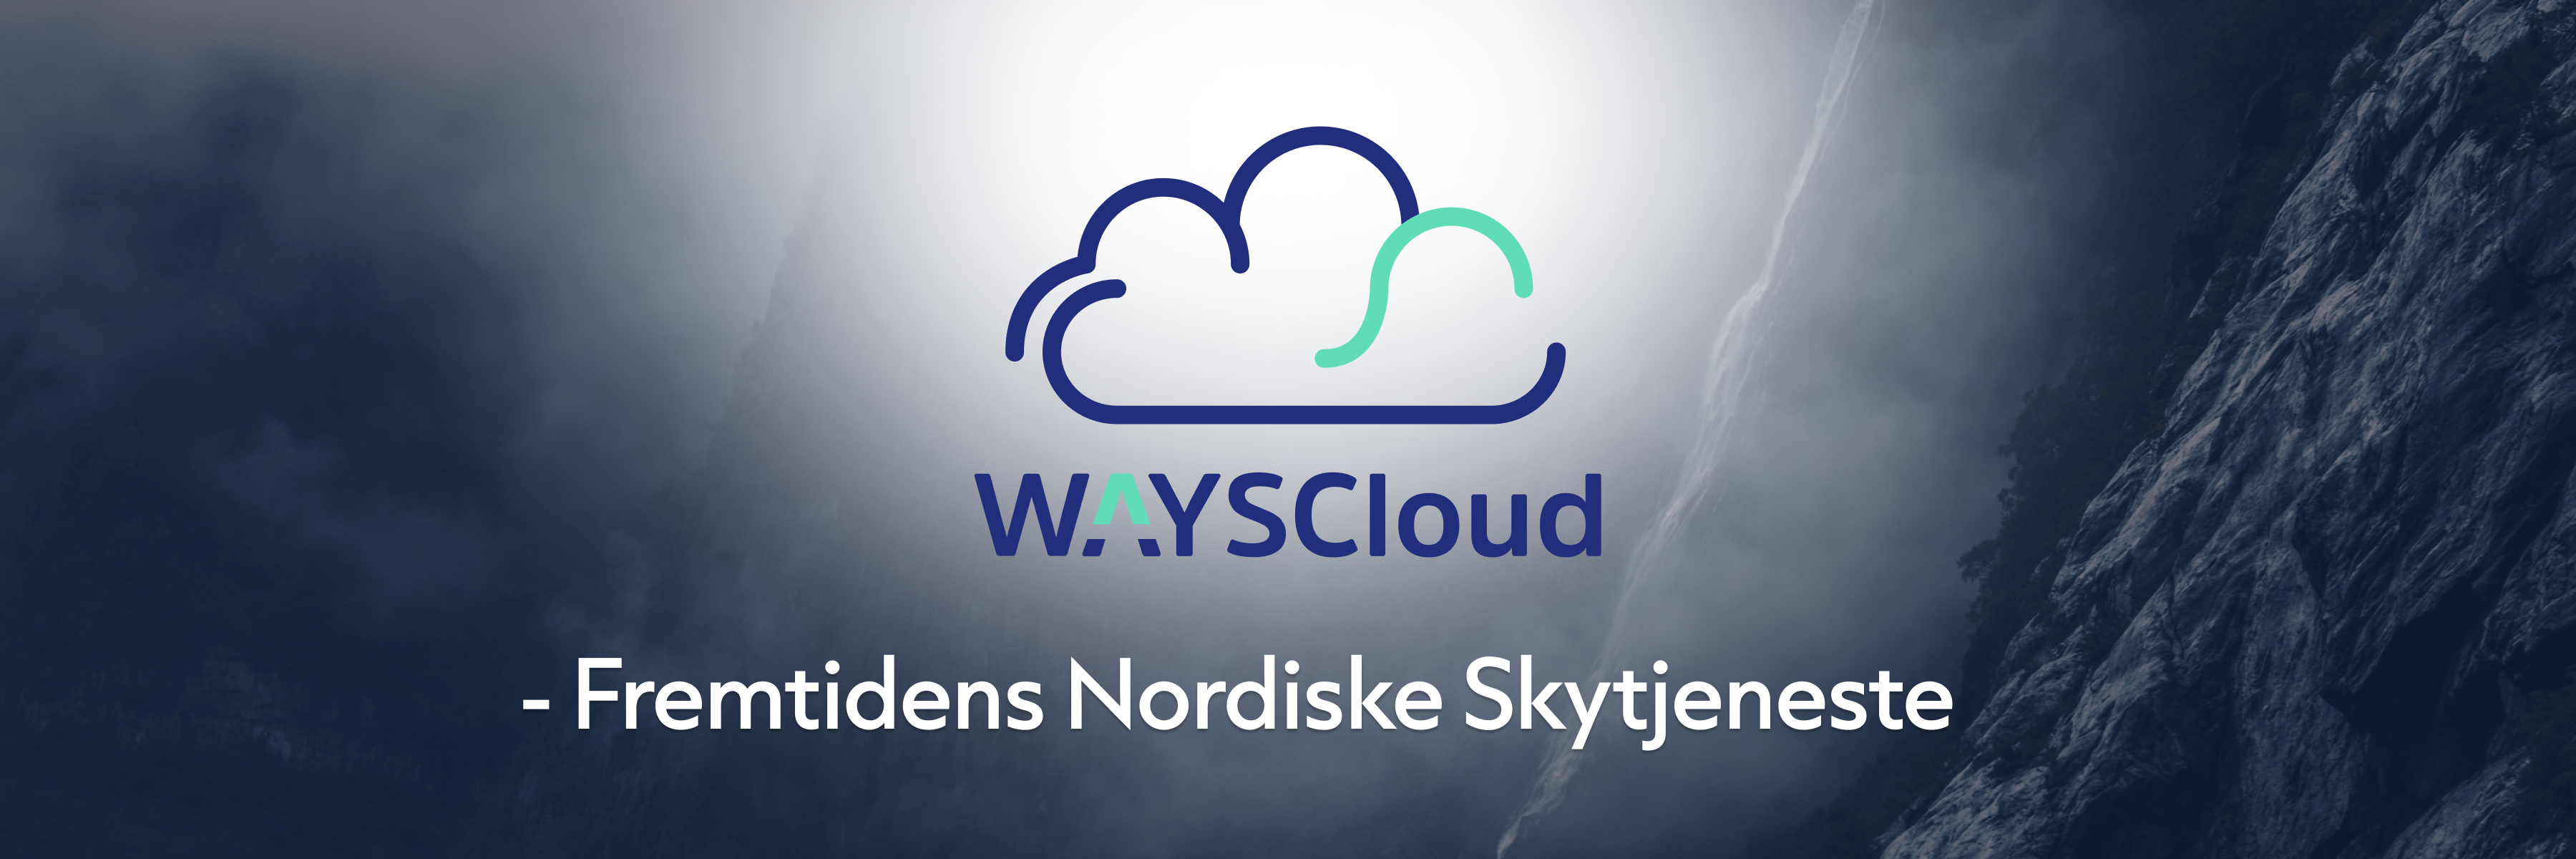 WAYSCloud - fremtidens nordiske skytjeneste for utviklere